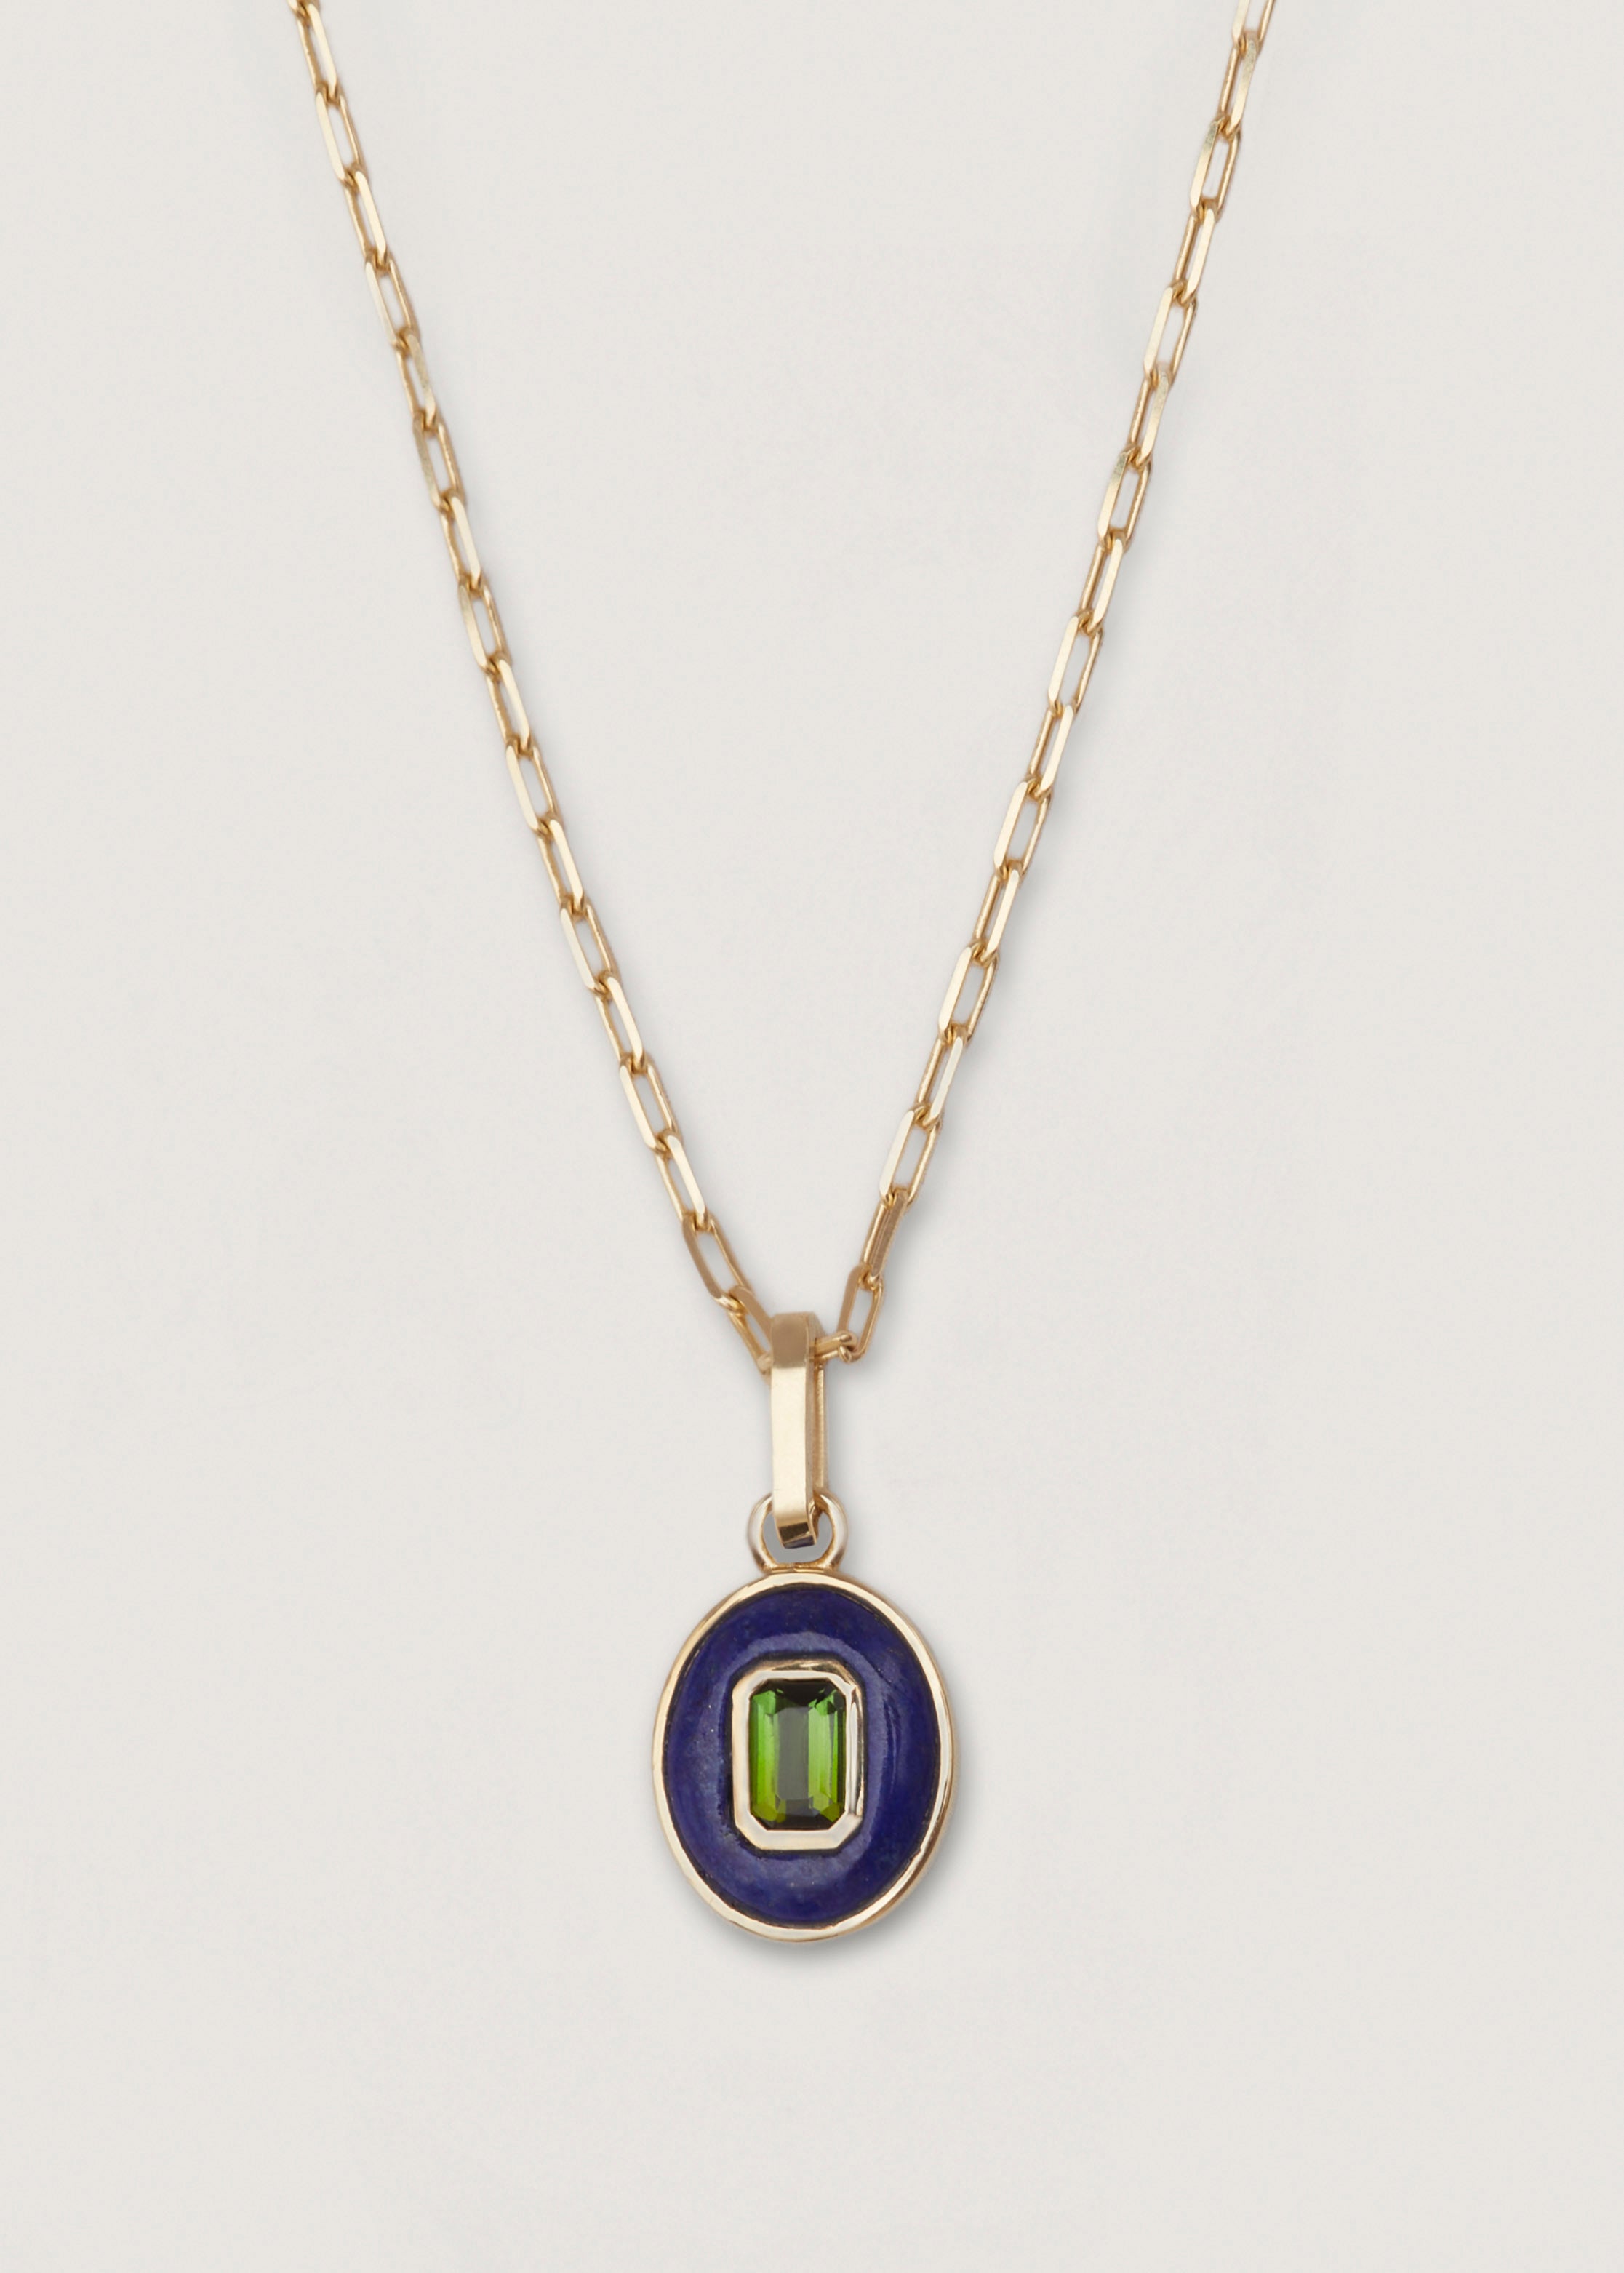 alt=amalfi oval pendant with pico link chain"